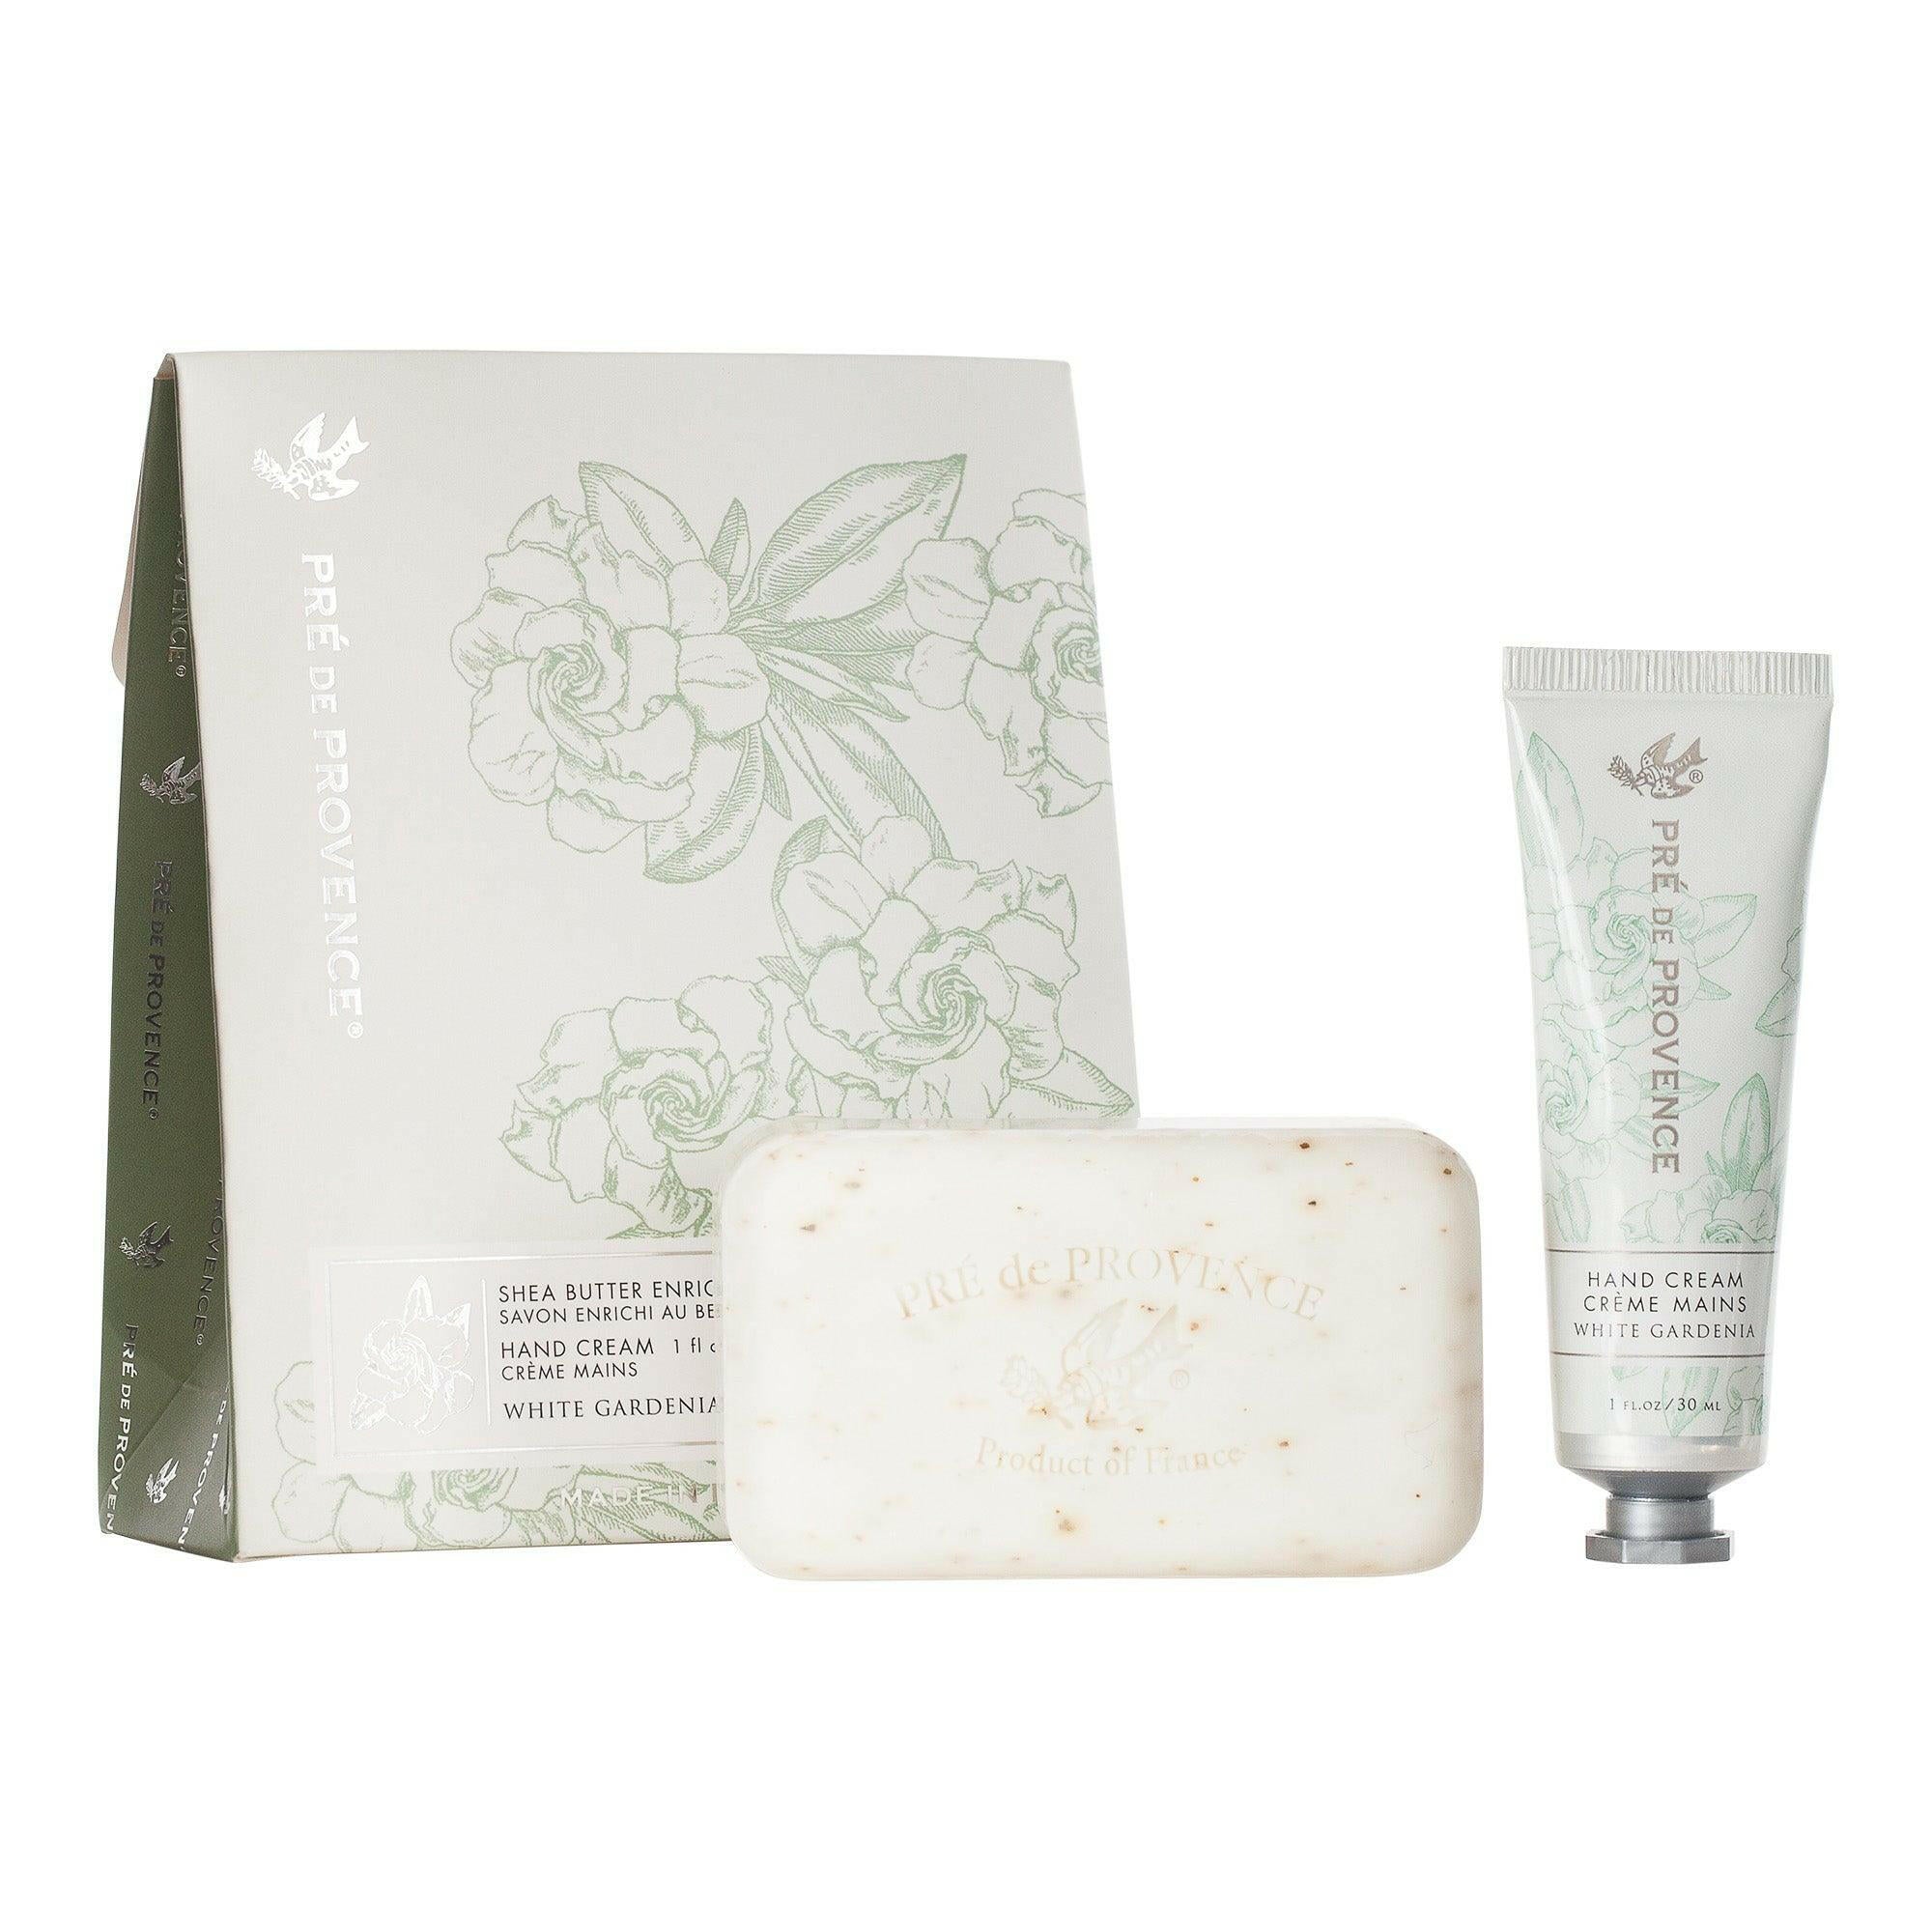 Soap & Hand Cream Gift Set - White Gardenia - The European Gift Store